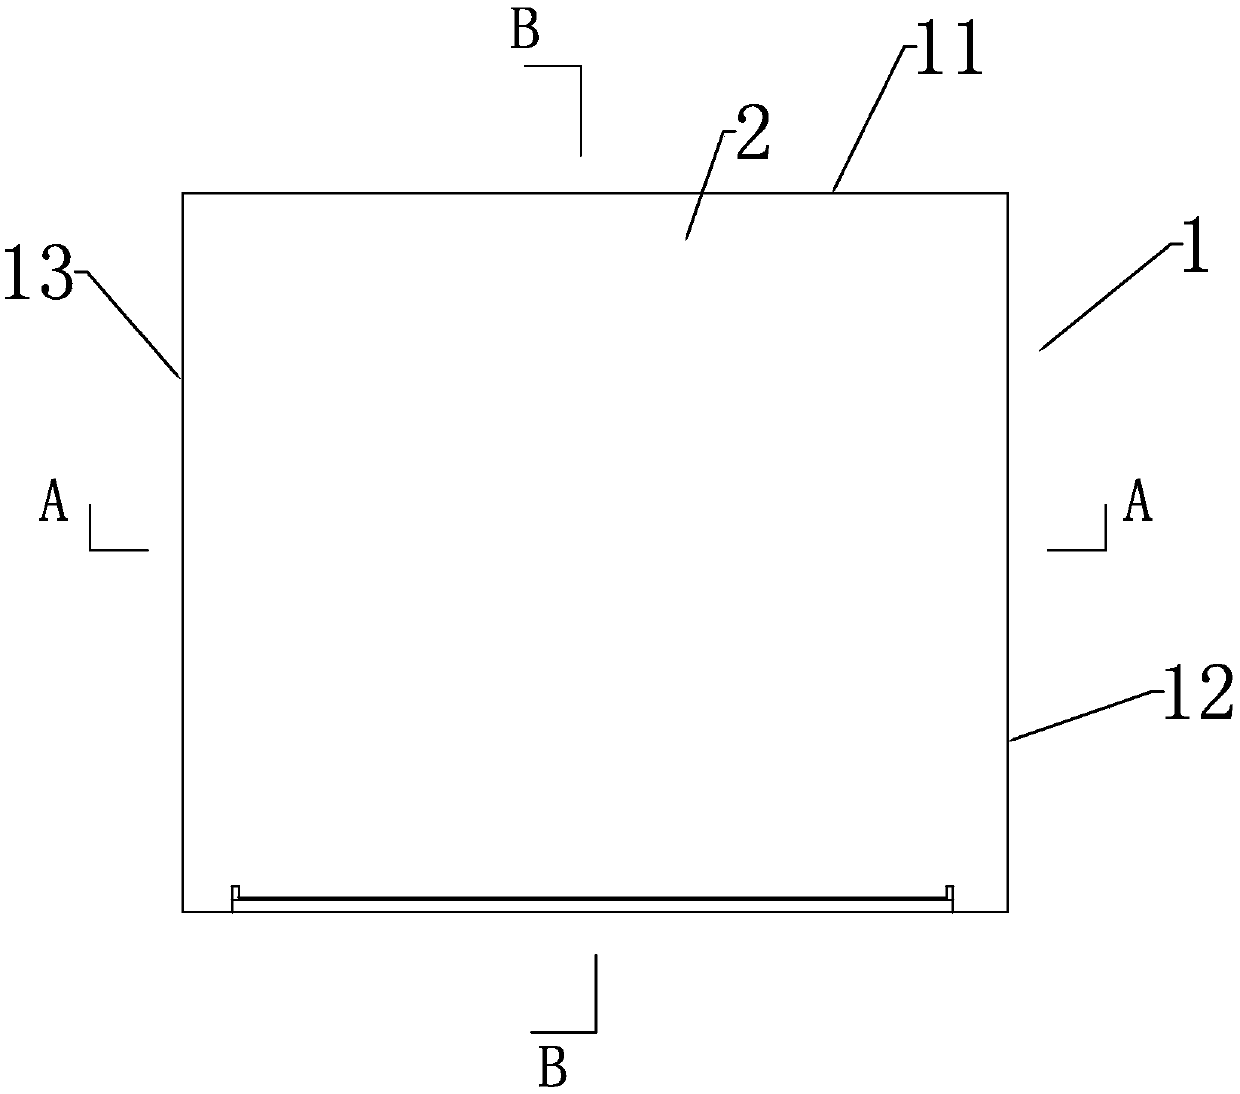 Cover body structure of square paper box